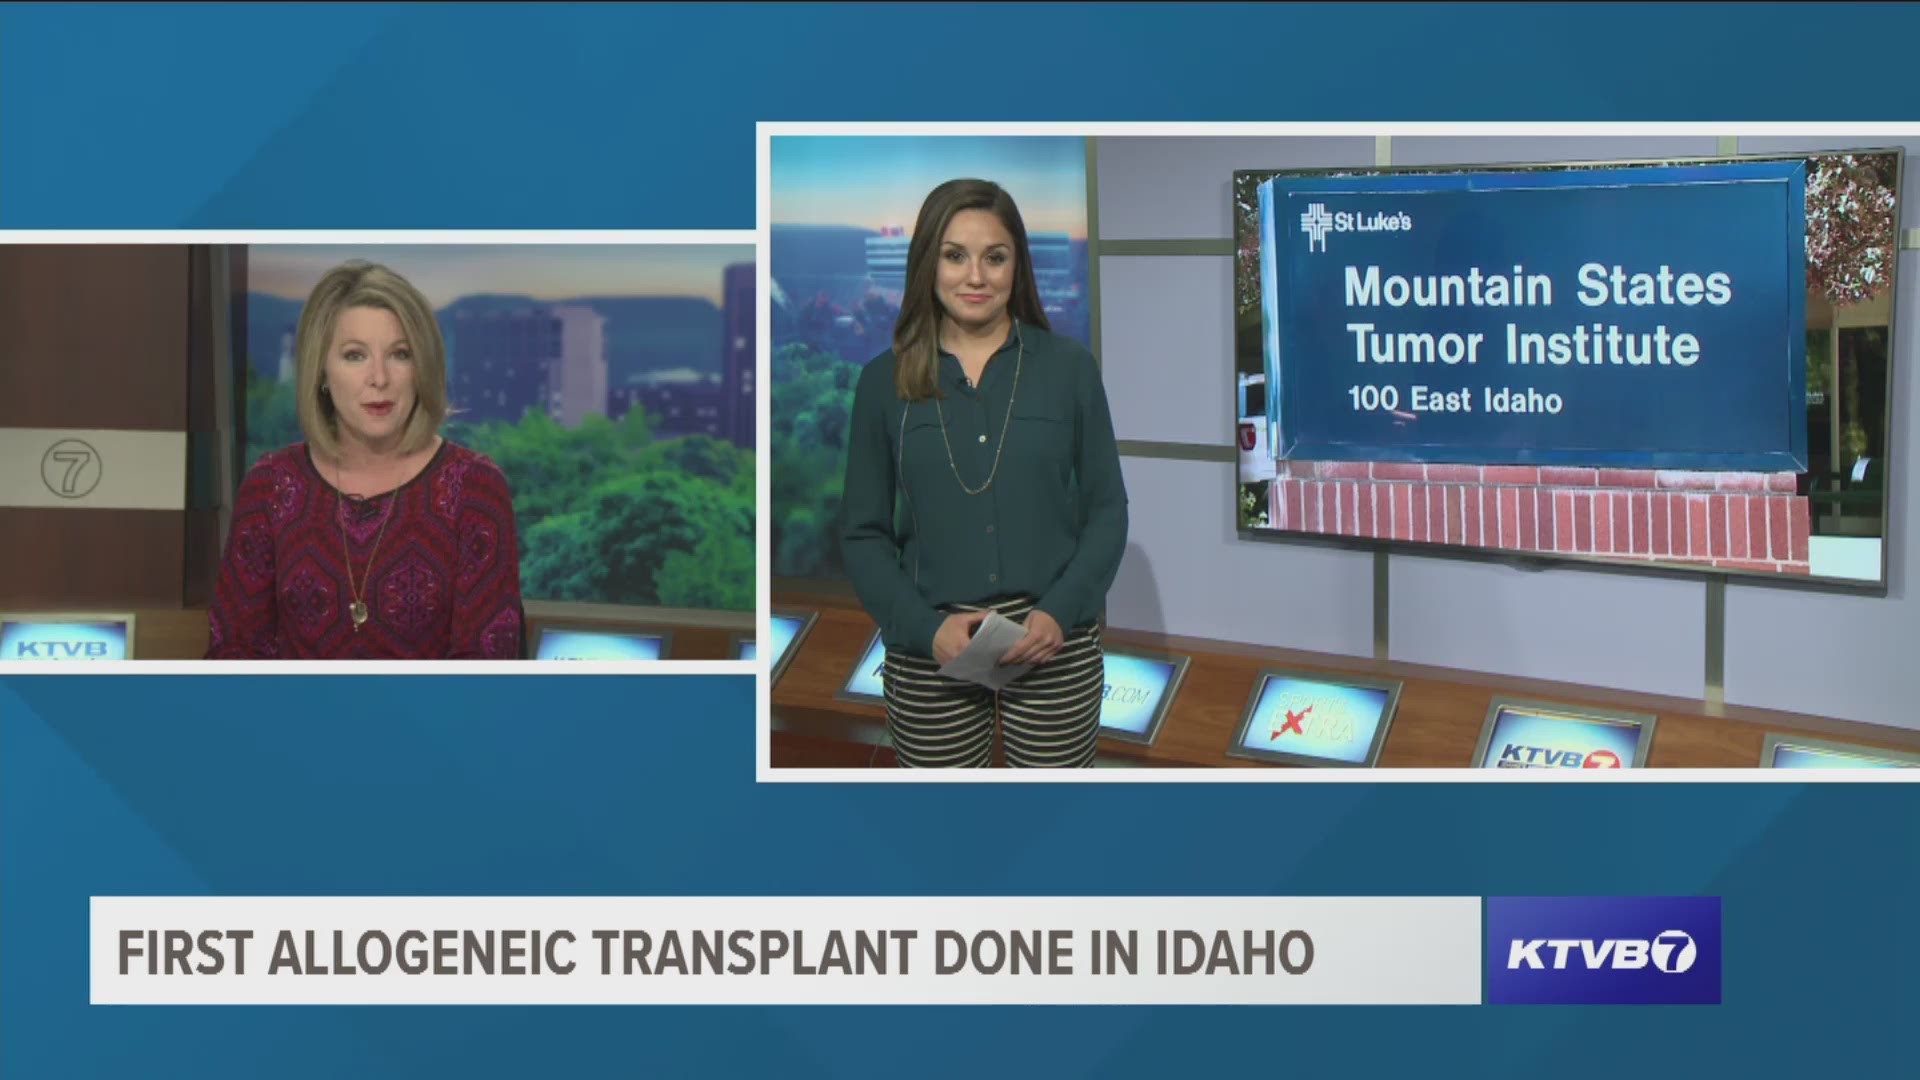 First allogeneic transplant in Idaho.